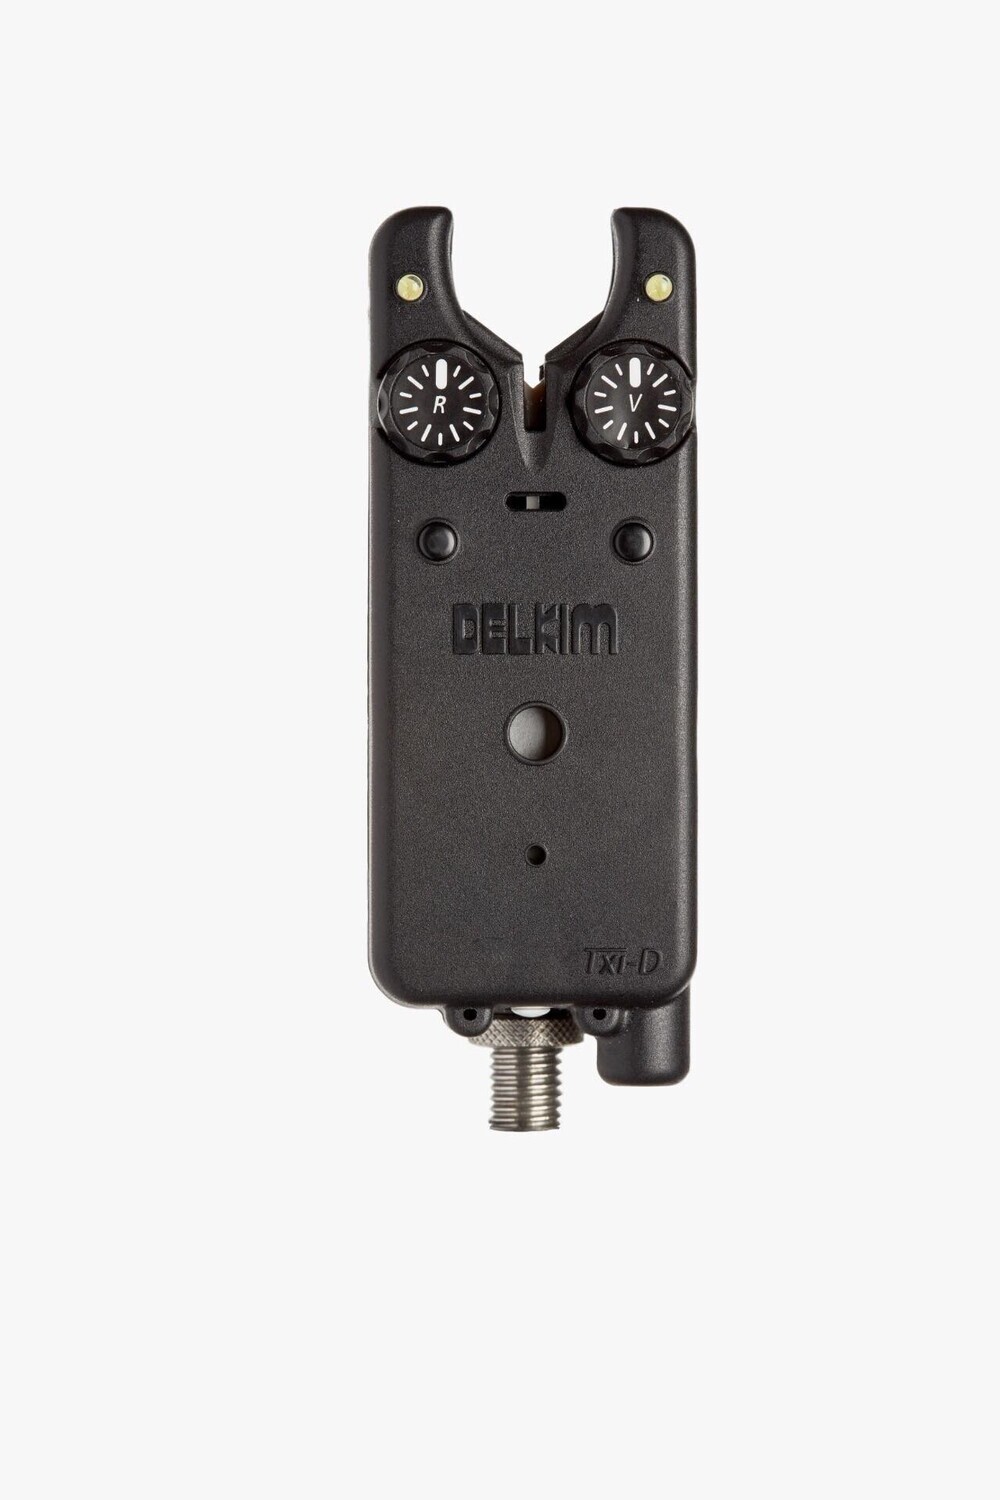 Delkim Txi-D - Digital Bite Alarm (Yellow LEDs)